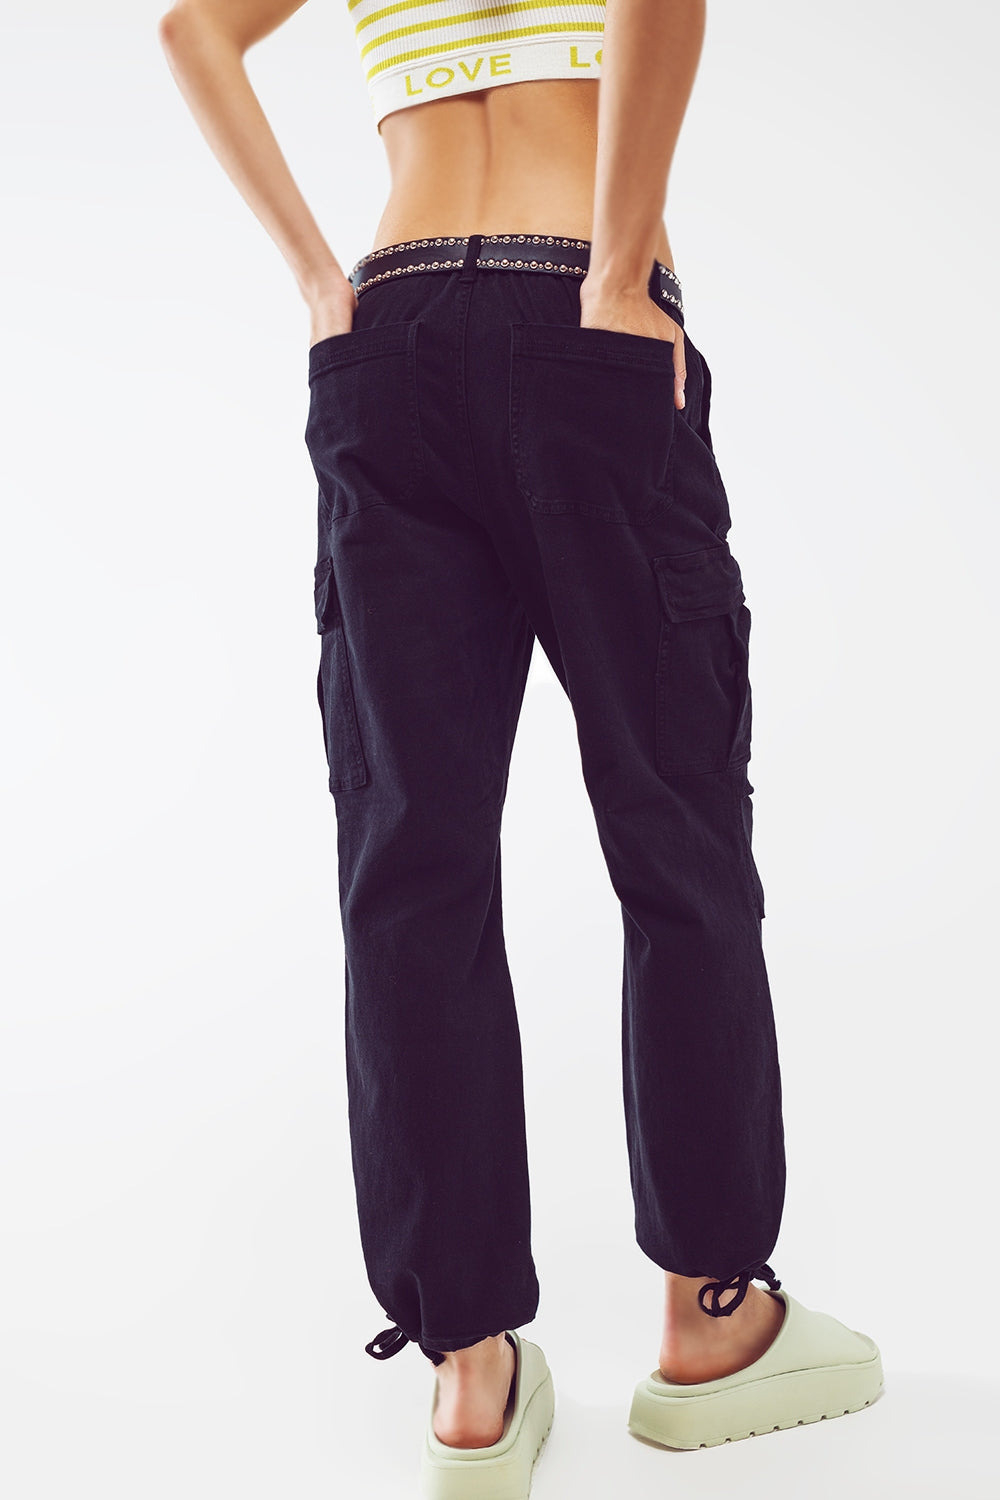 Cargo Pants with Tassel ends in black - Szua Store